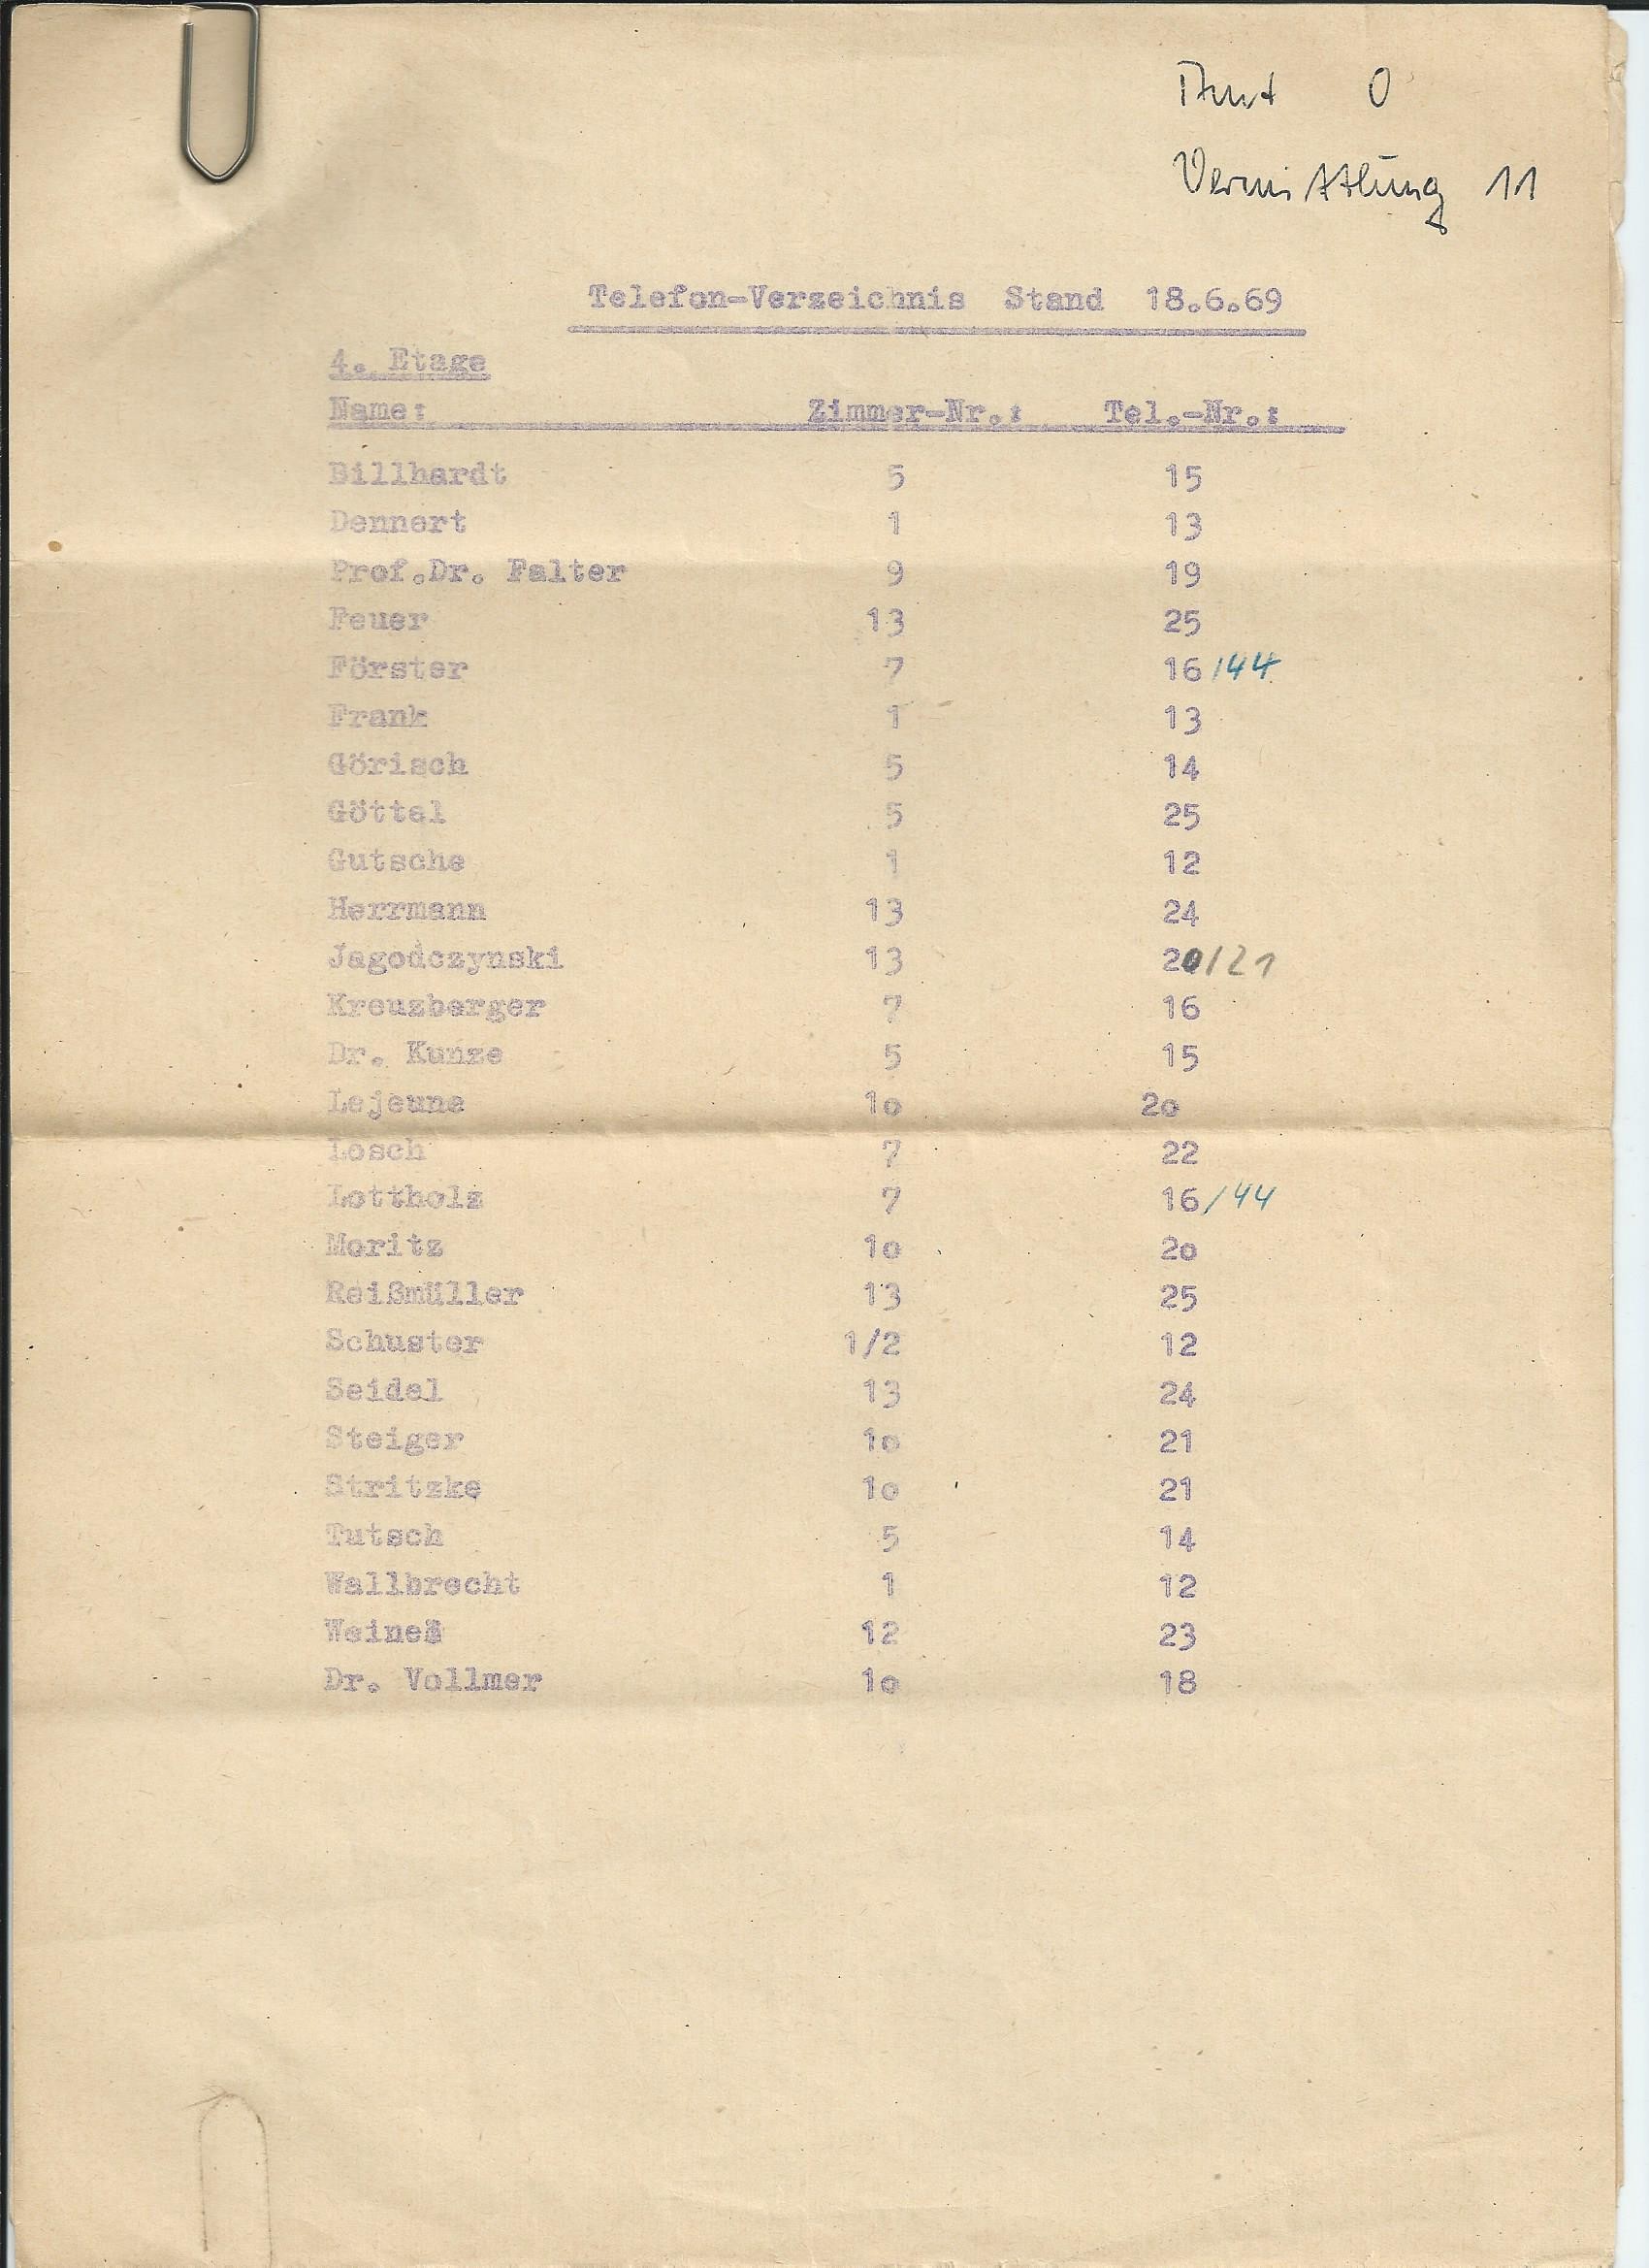 Telefonverzeichnis des Elektronikhandels 1969 (www.industriesalon.de CC BY-NC-SA)